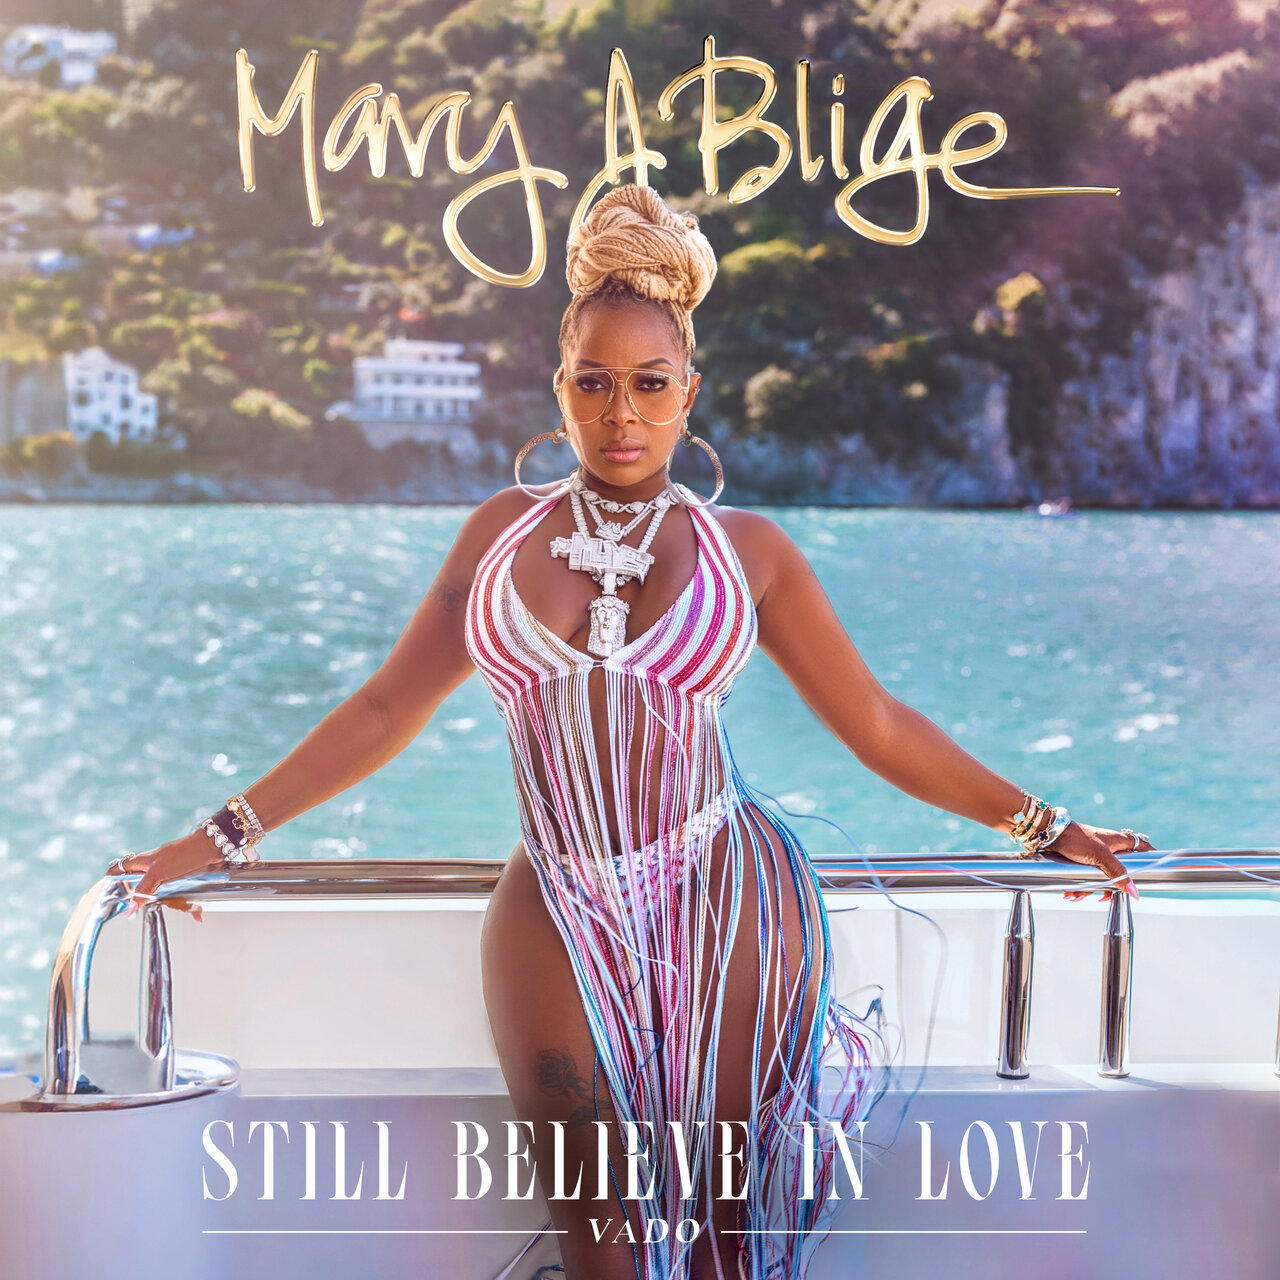 Mary J. Blige - Still Believe In Love (ft. Vado) (Cover)